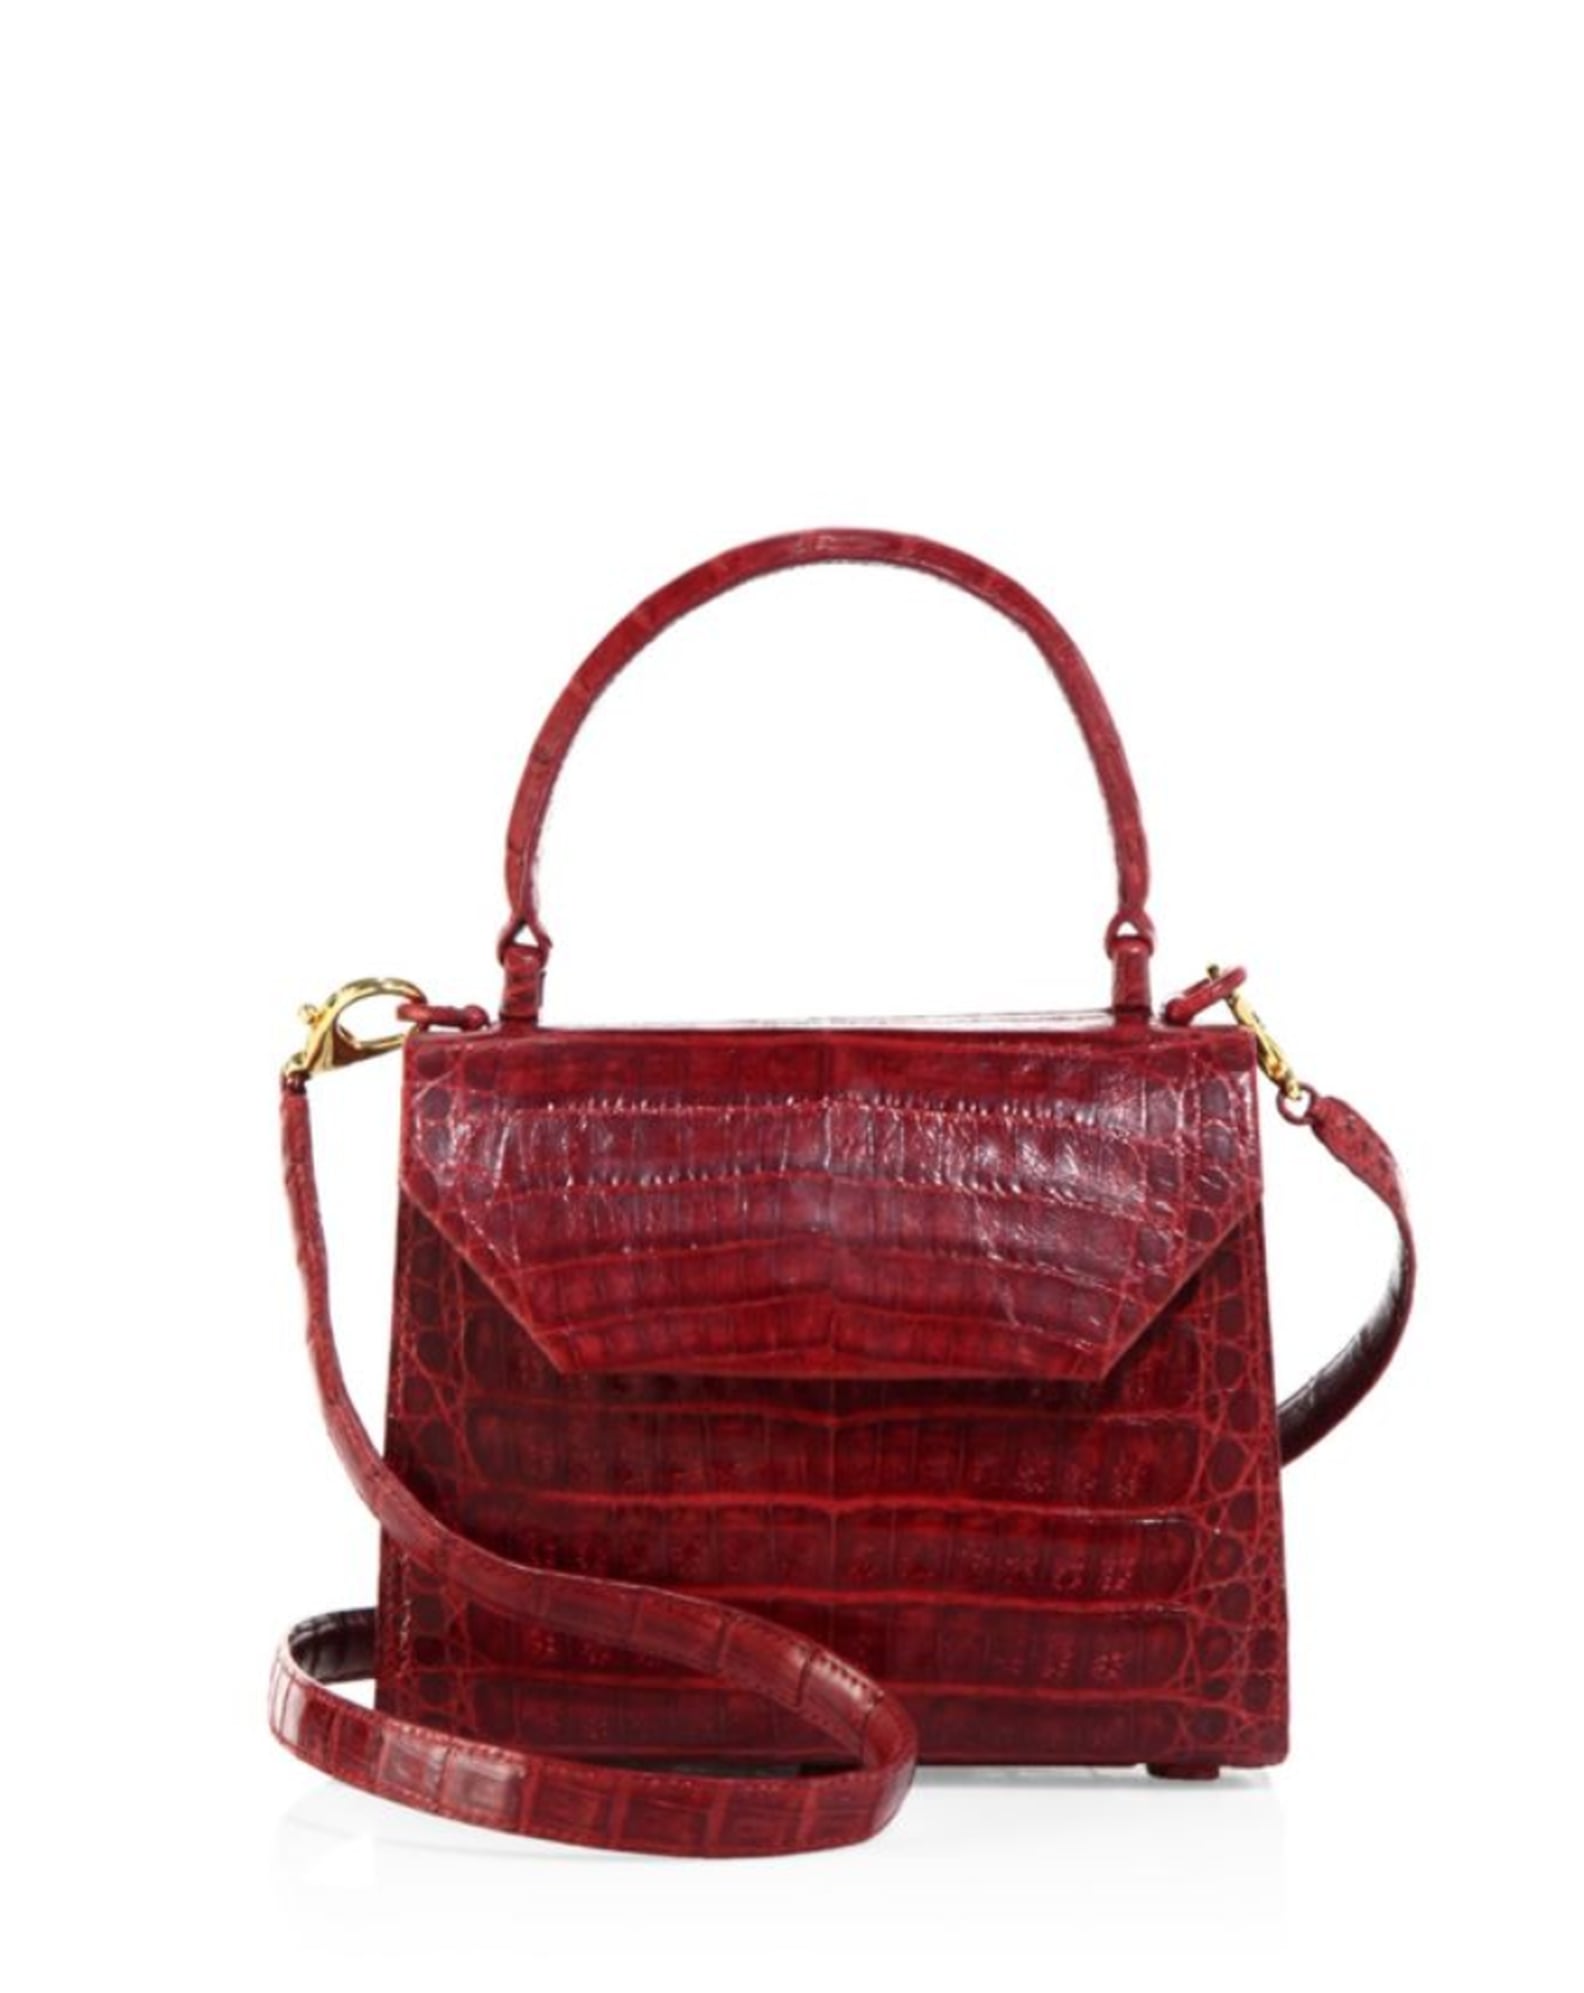 Queen Rania's Red Givenchy Bag | POPSUGAR Fashion